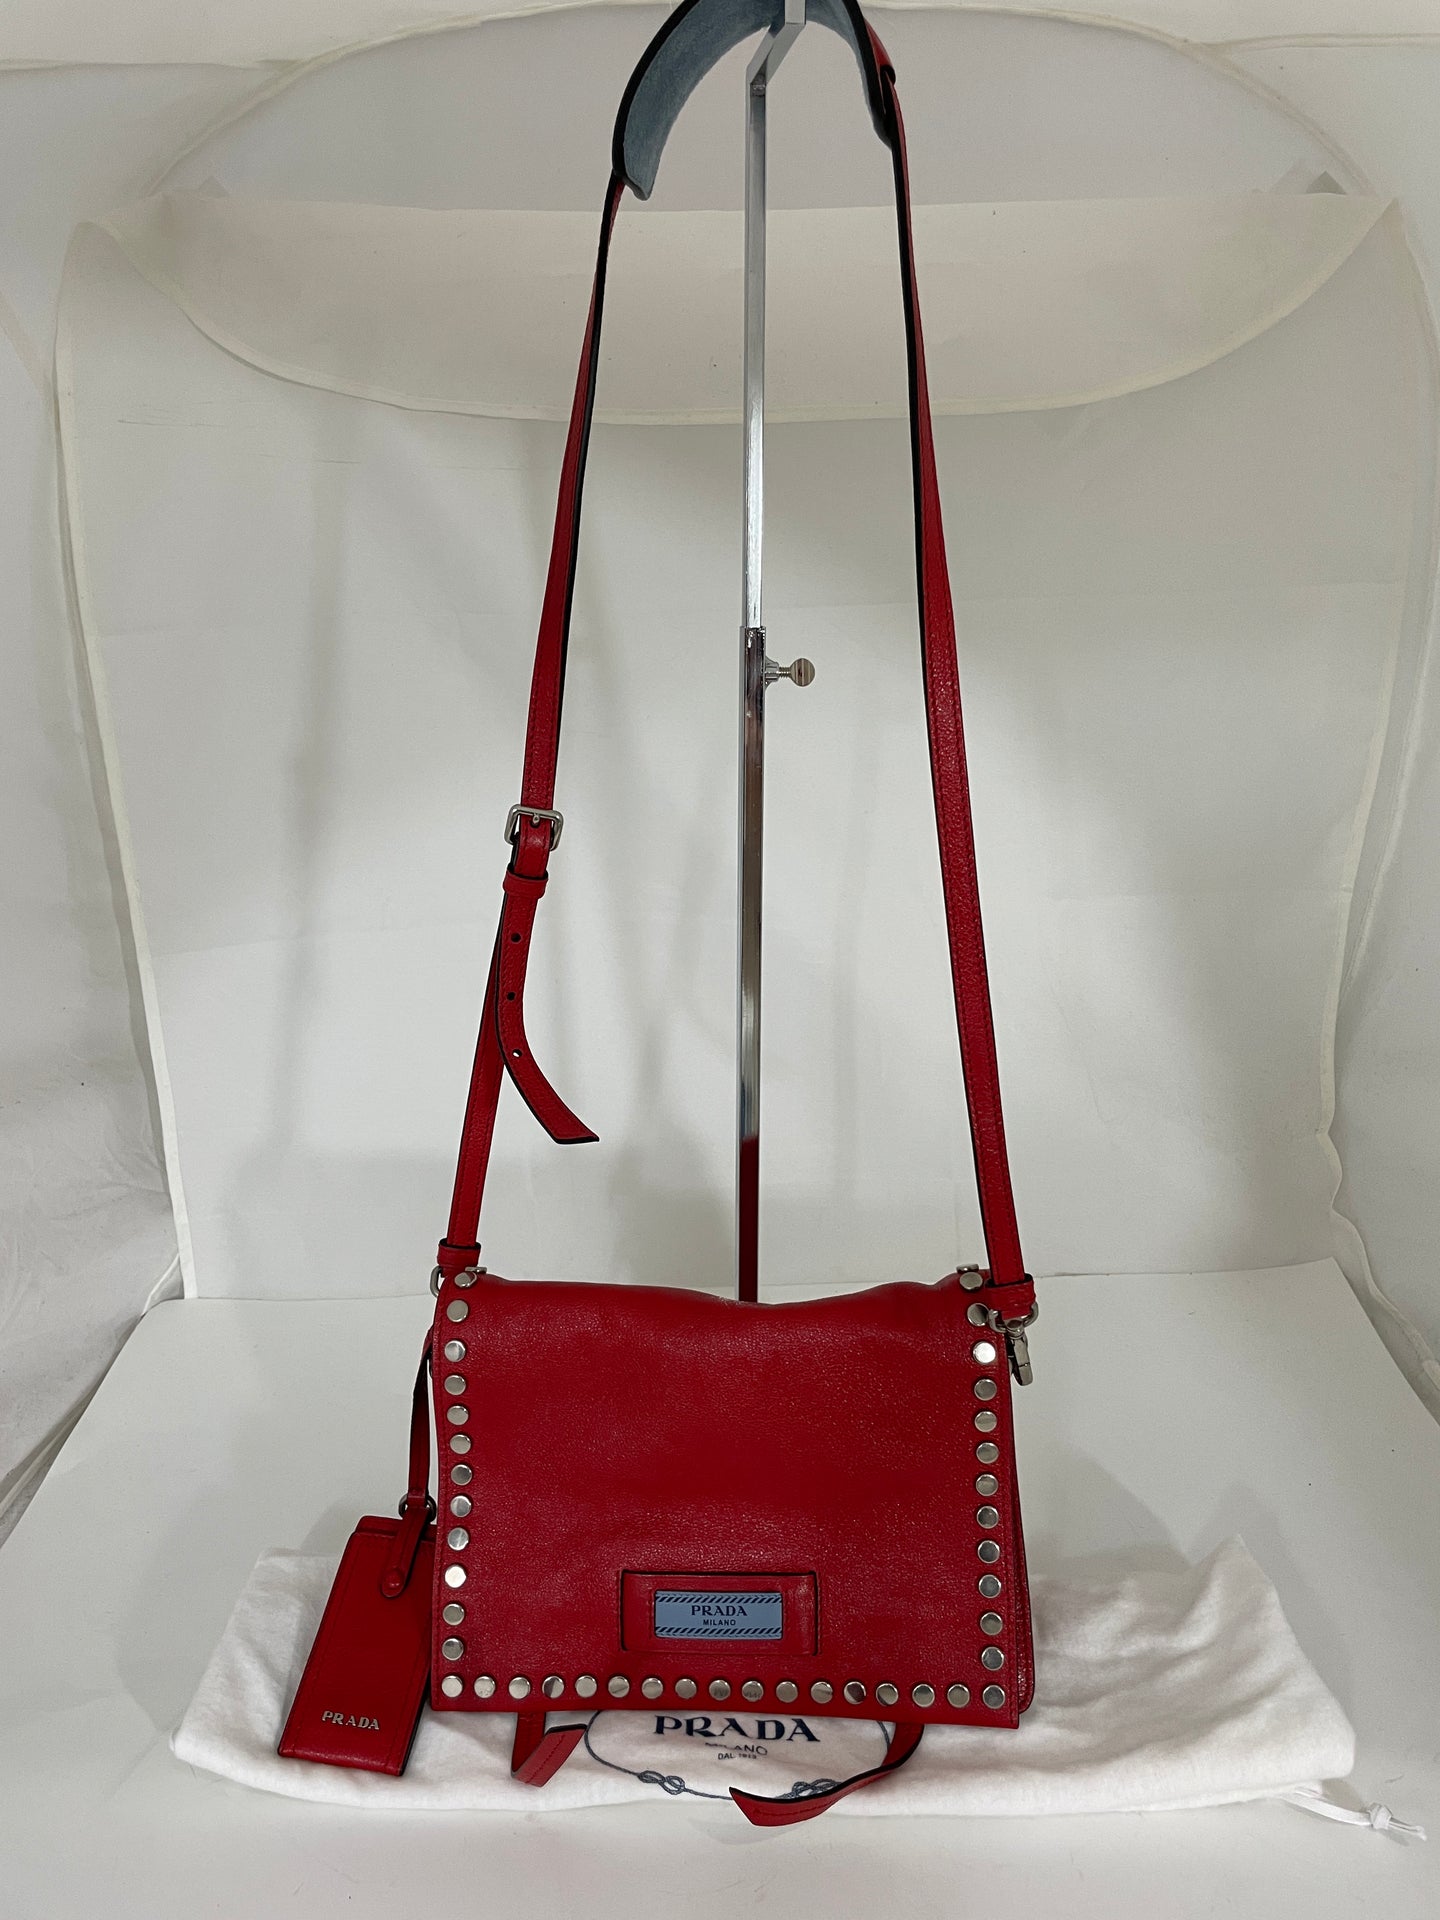 Prada Red Metallic Leather Studded Crossody Bag